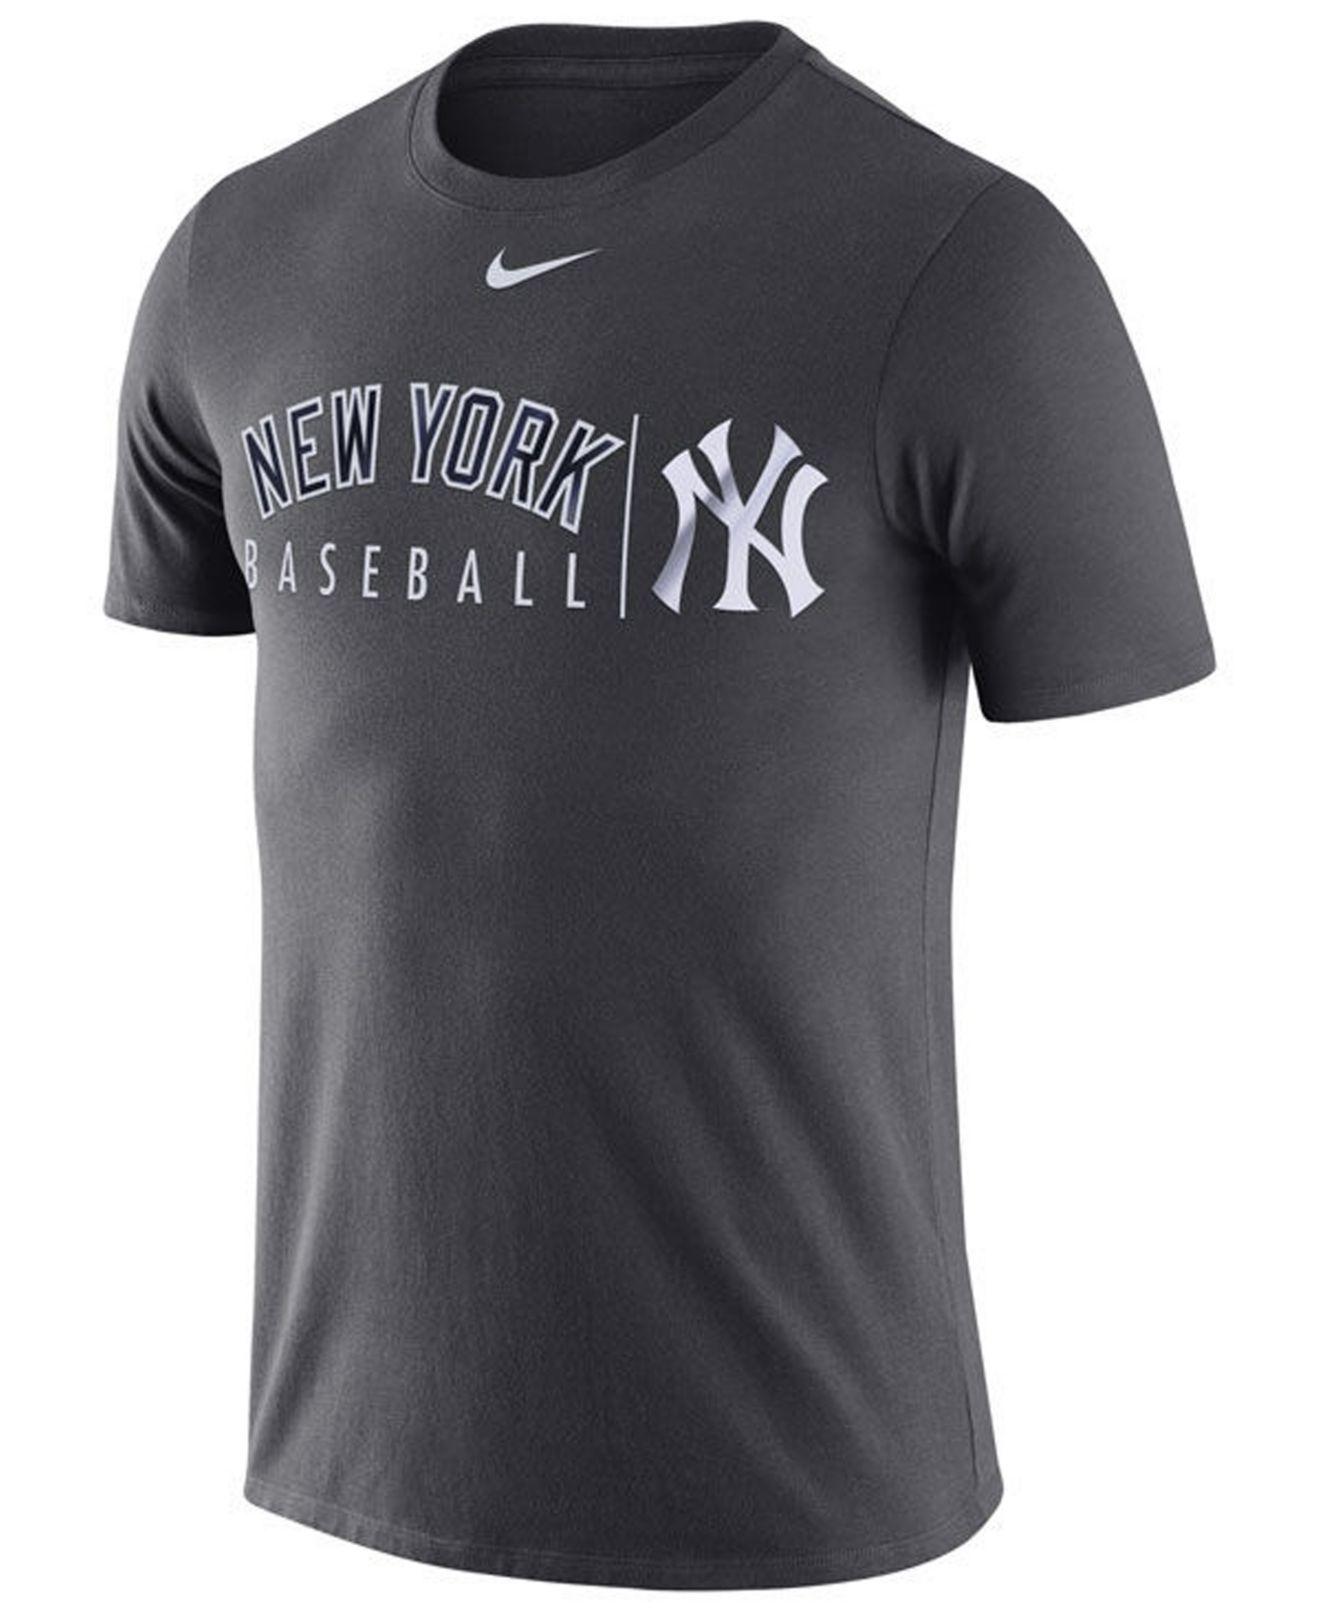 Lyst - Nike New York Yankees Dri-fit Practice T-shirt in Gray for Men